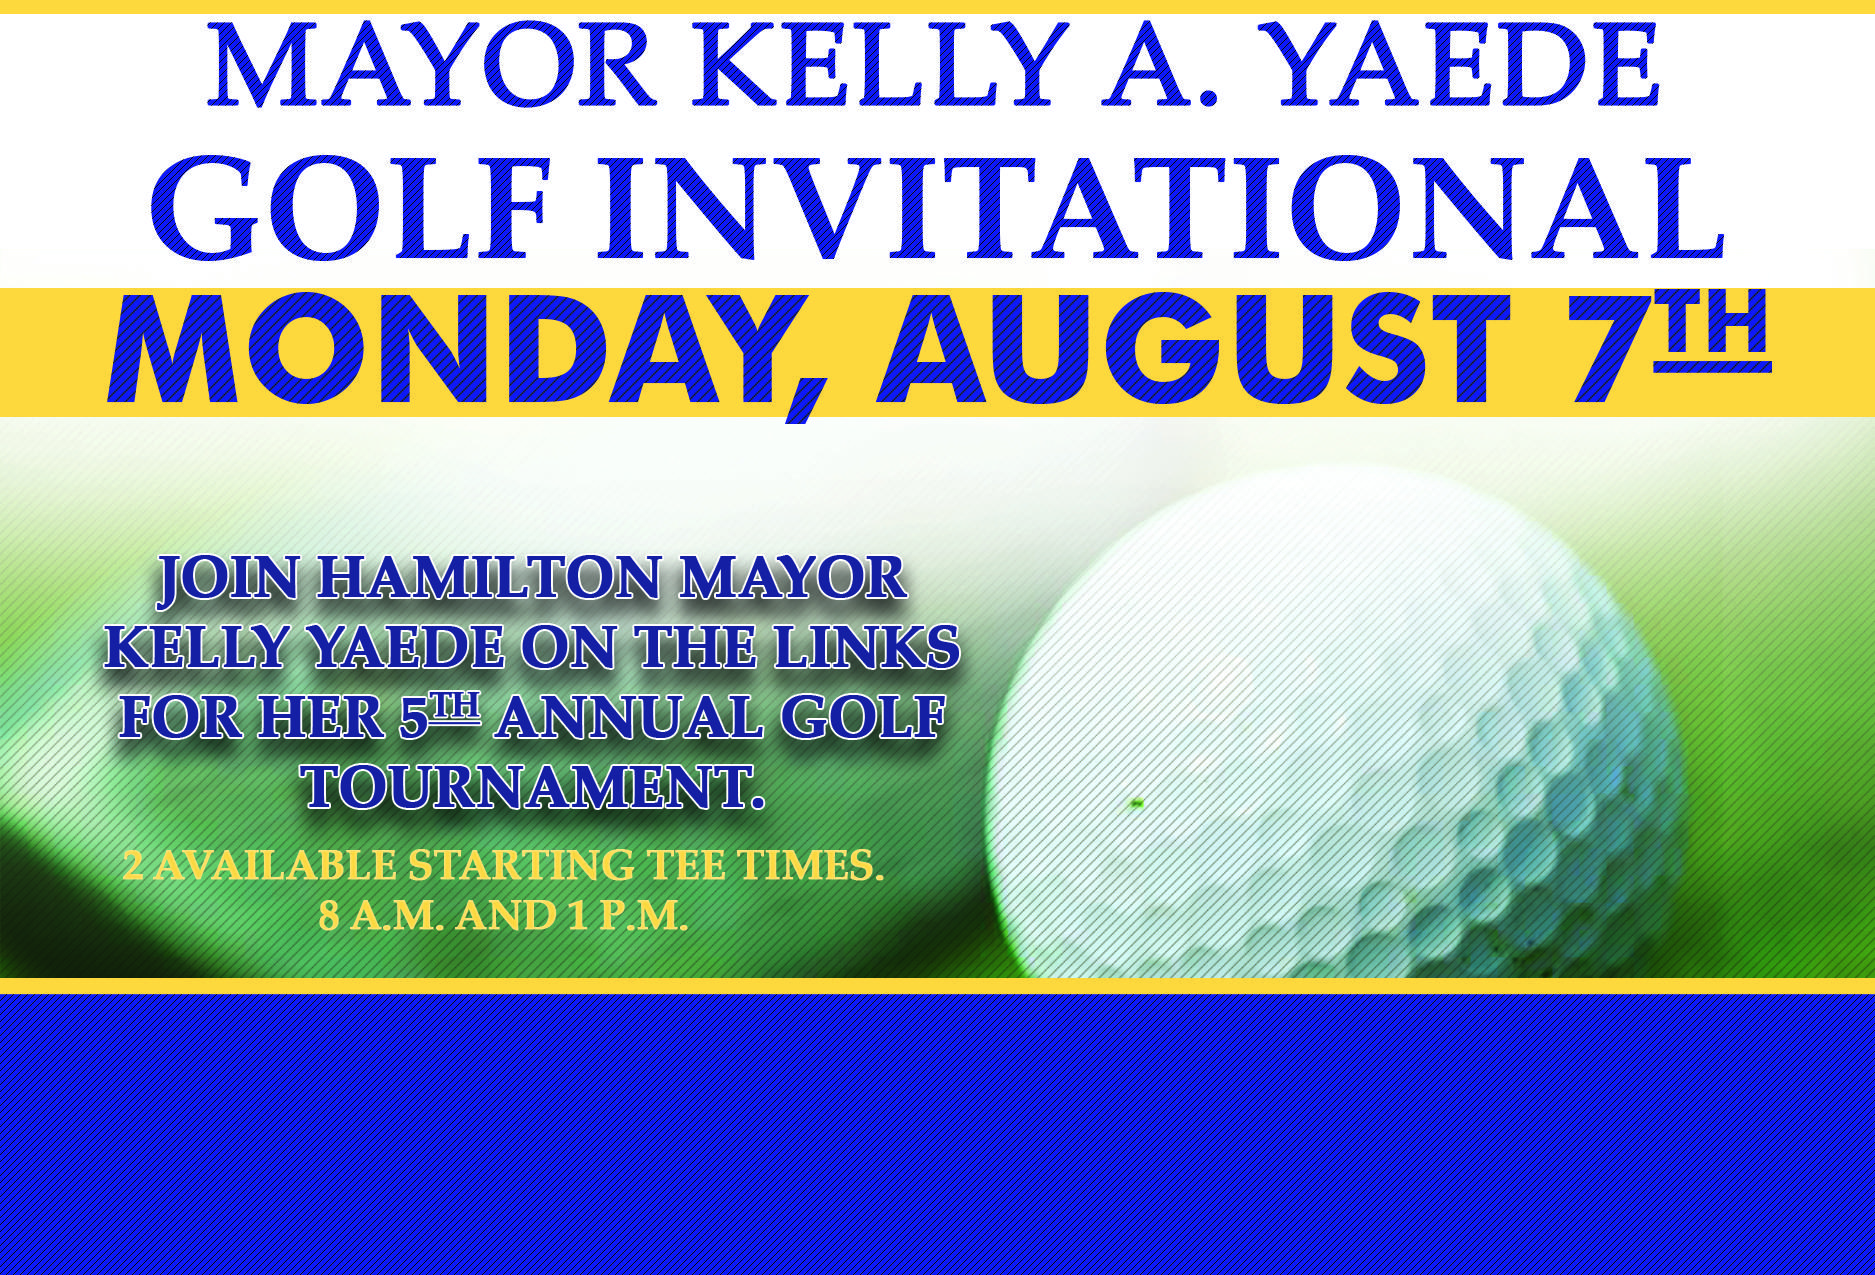 Hamilton Mayor Kelly A Yaede's 5th Annual Golf Invitational